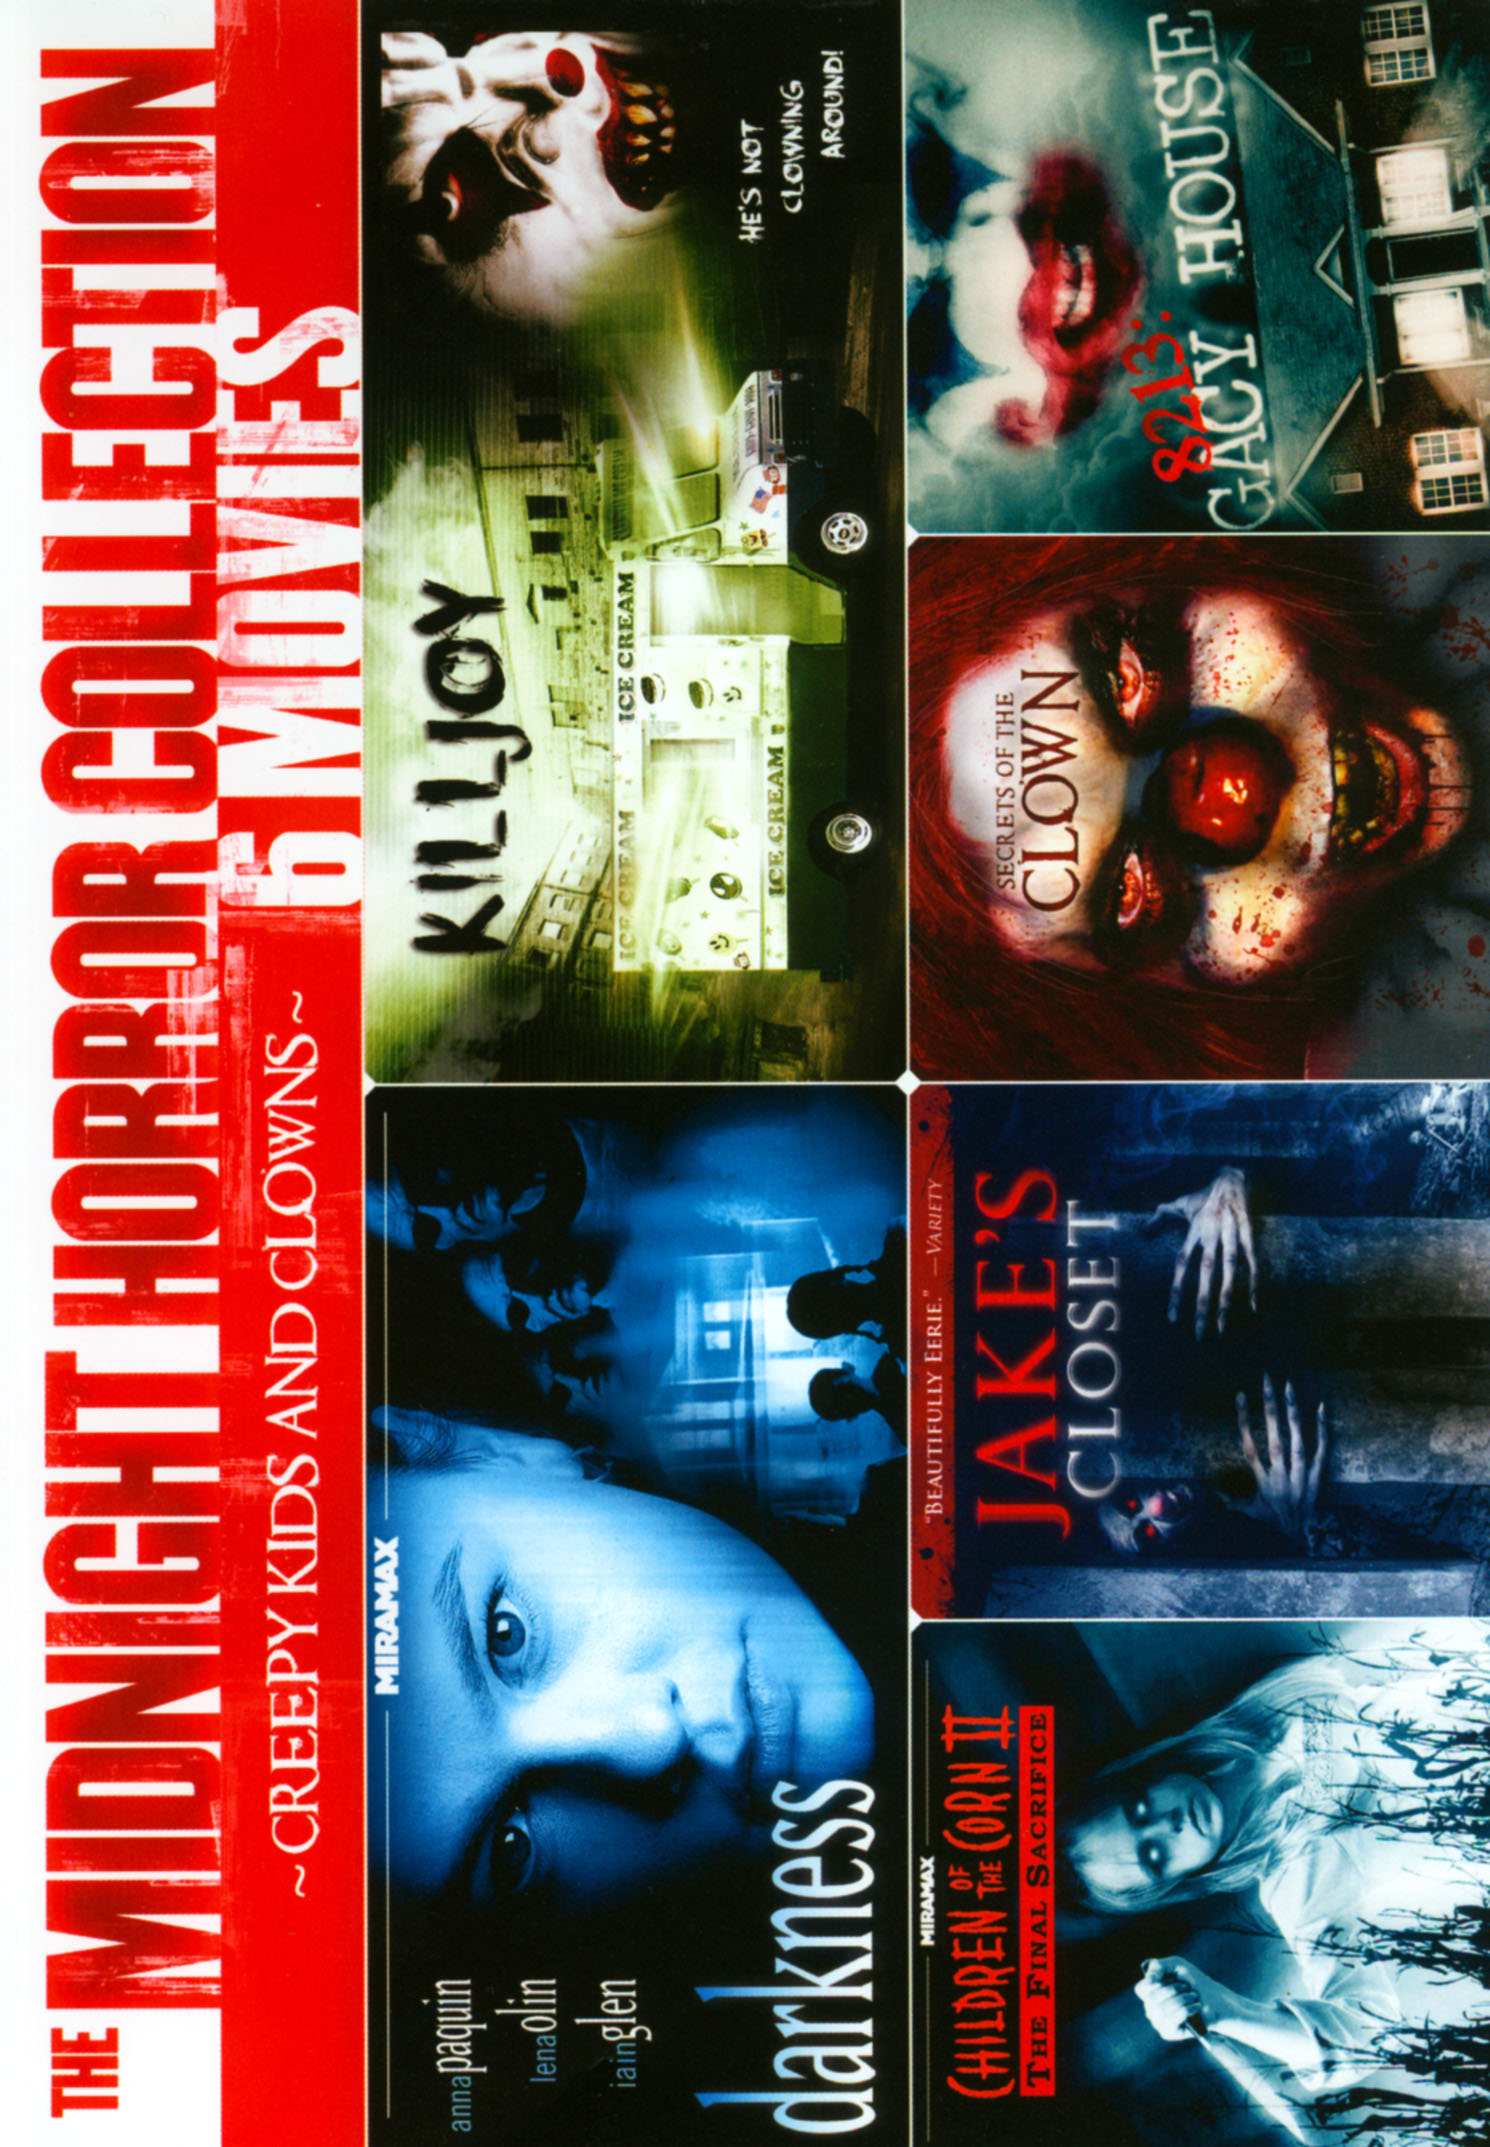 Midnight Horror Deadly Legends: 8 Movies (DVD, 2012) MR. Halloween